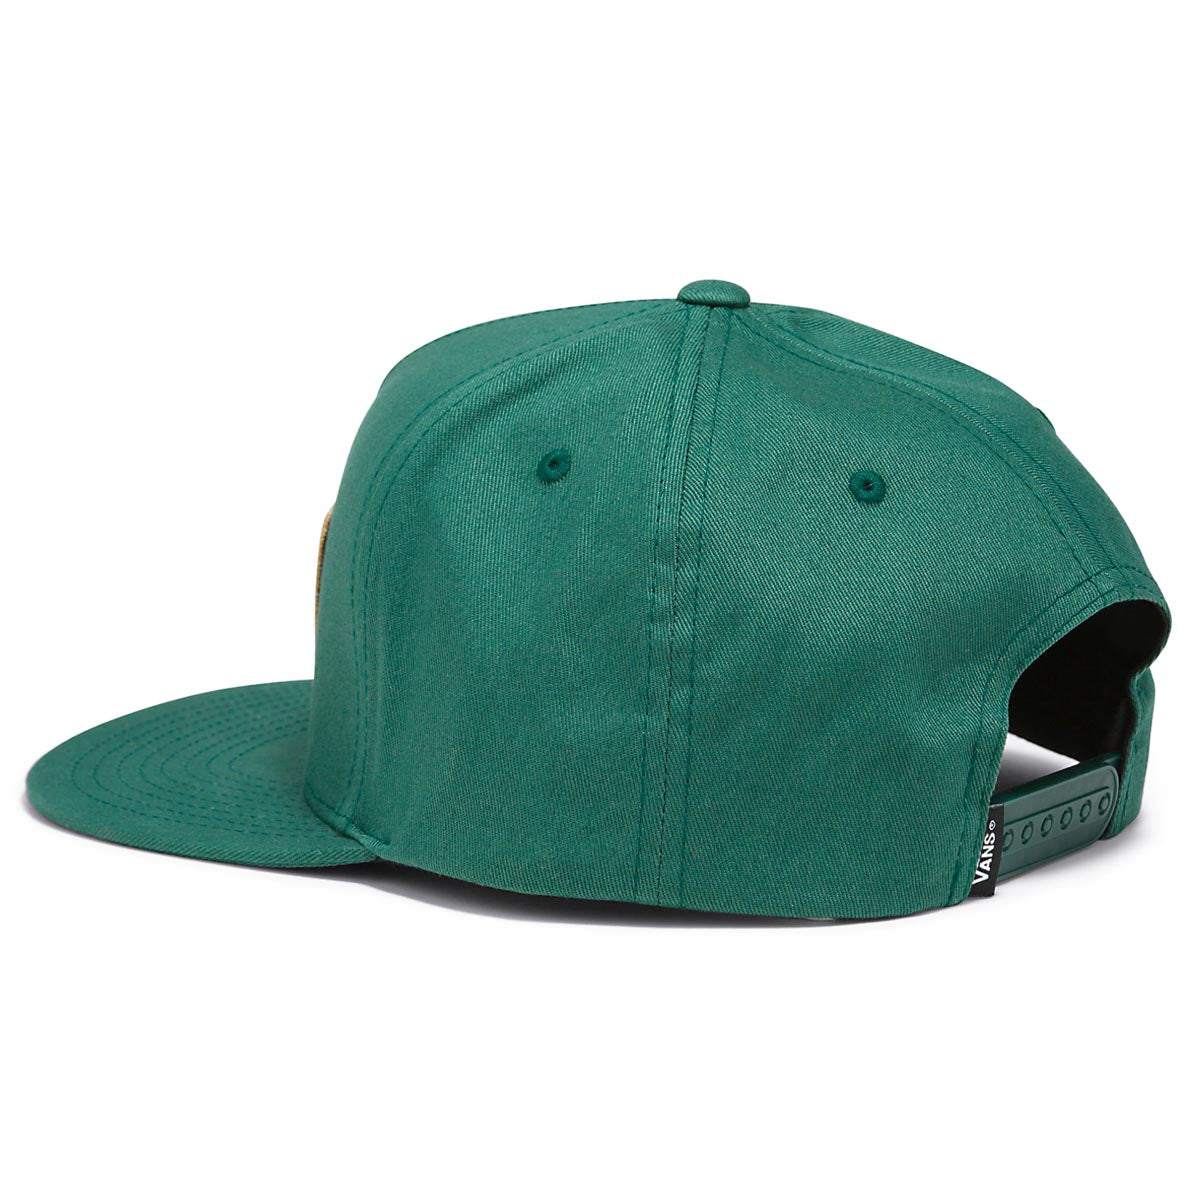 Vans Full Patch Snapback Hat - Bistro Green image 2